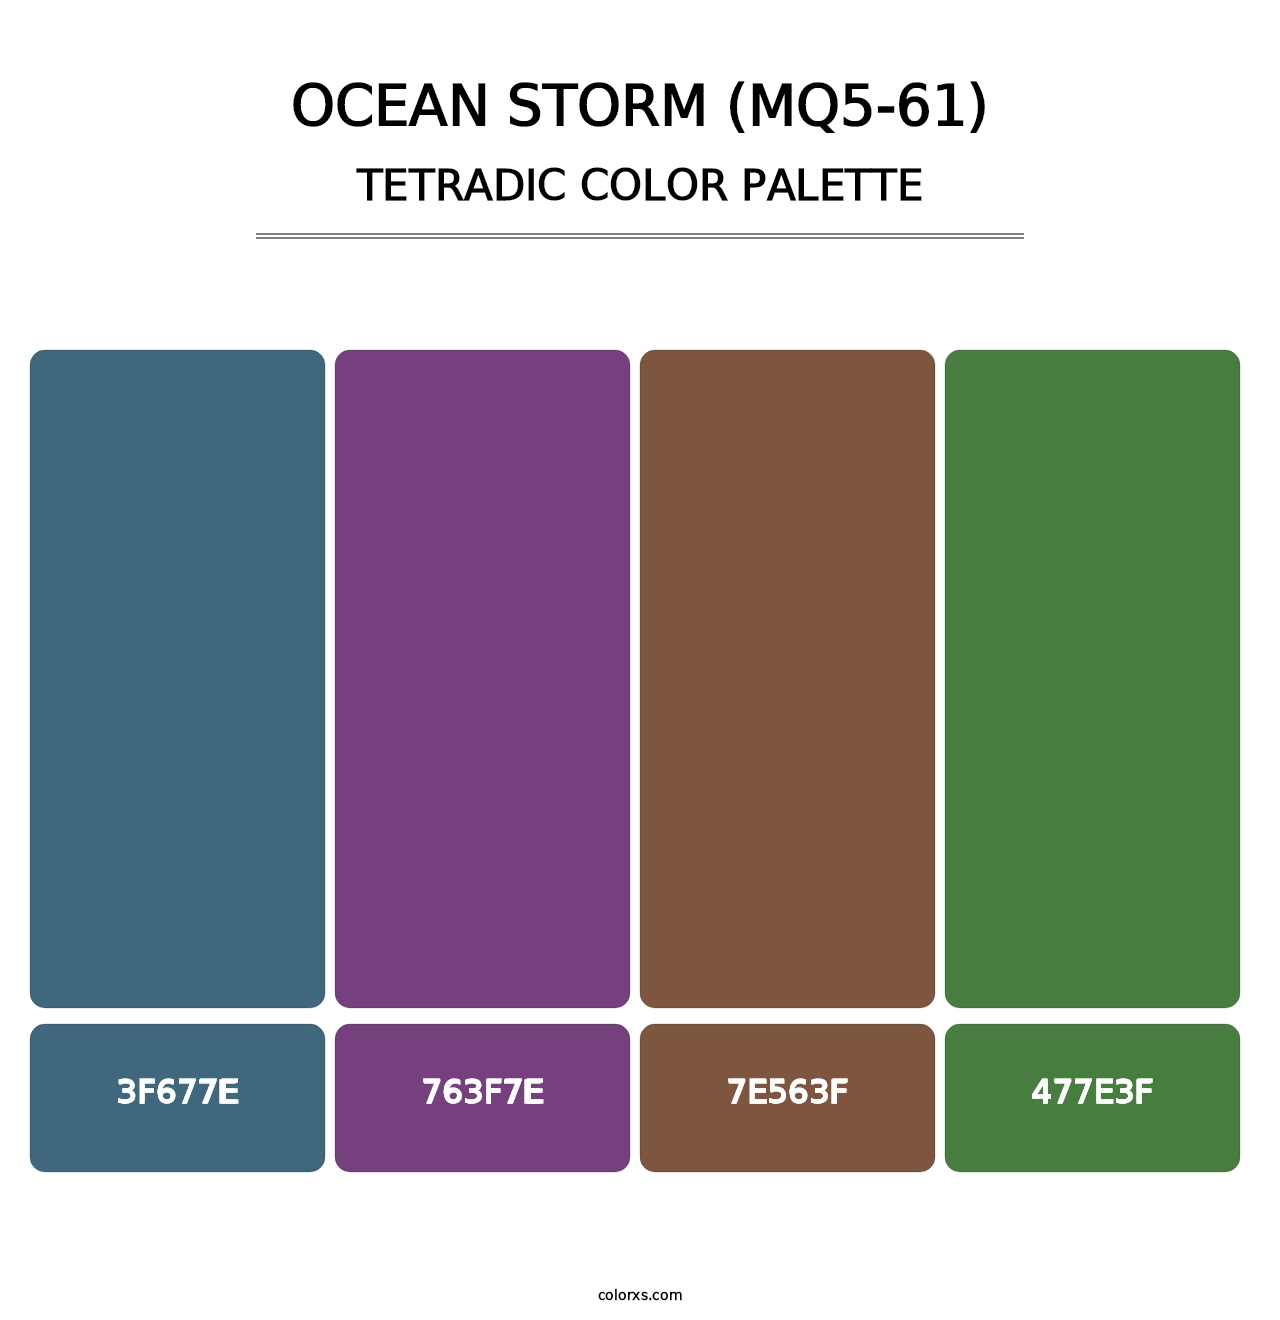 Ocean Storm (MQ5-61) - Tetradic Color Palette